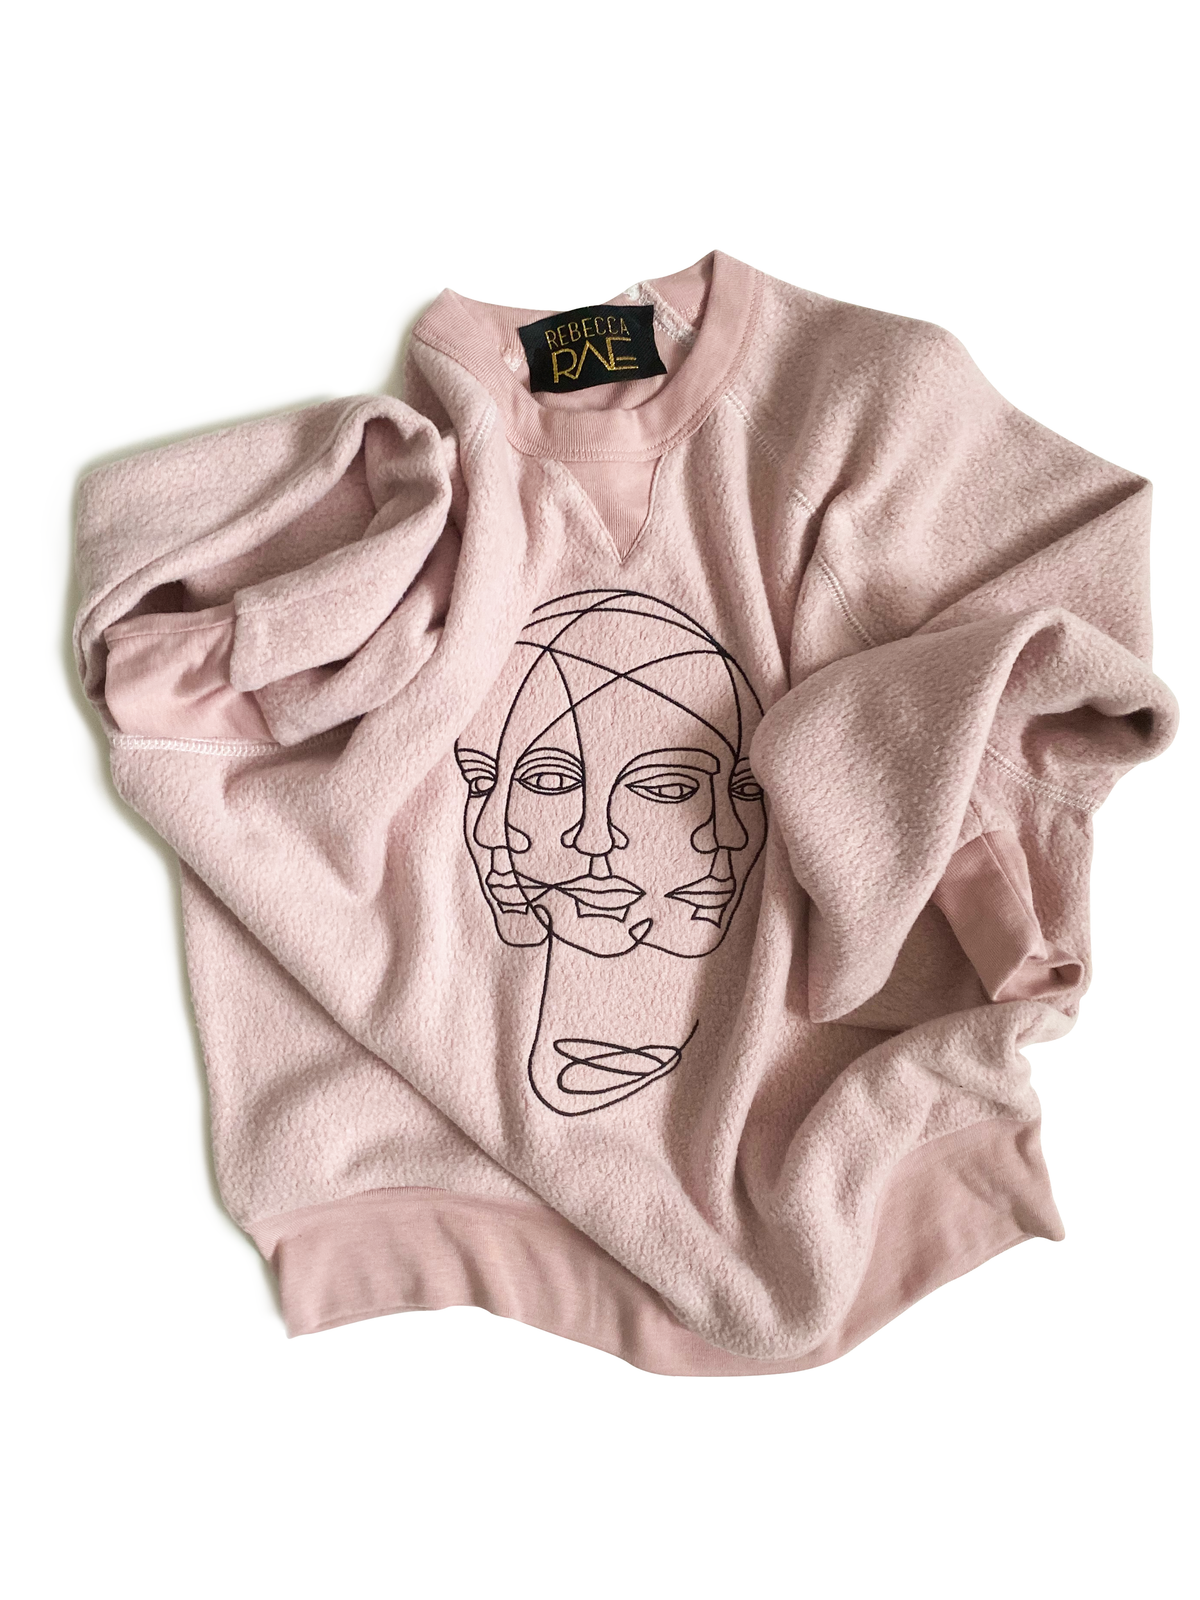 Blush Color, Mindfulness, Embroidered, Crewneck Crop Sweatshirt